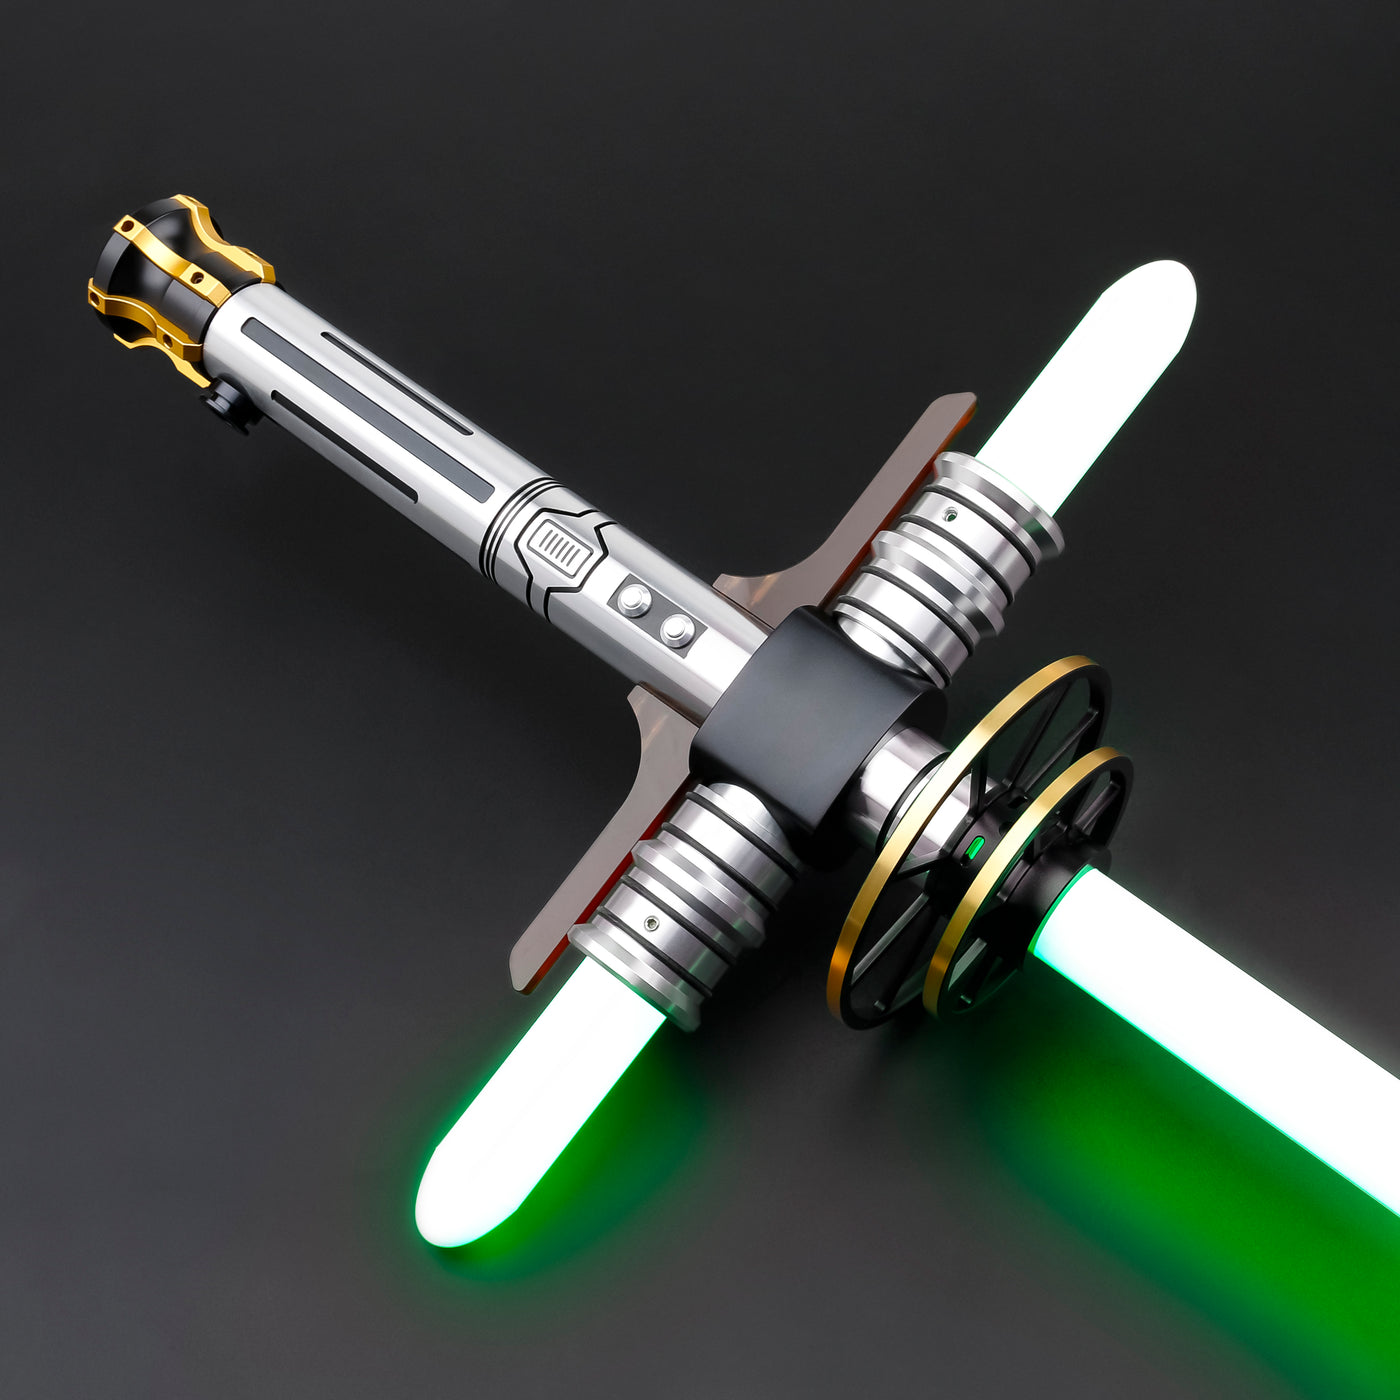 Celestial Guard - KenJo Sabers - Star Wars Lightsaber replica Jedi Sith - Best sabershop Europe - Nederland light sabers kopen -